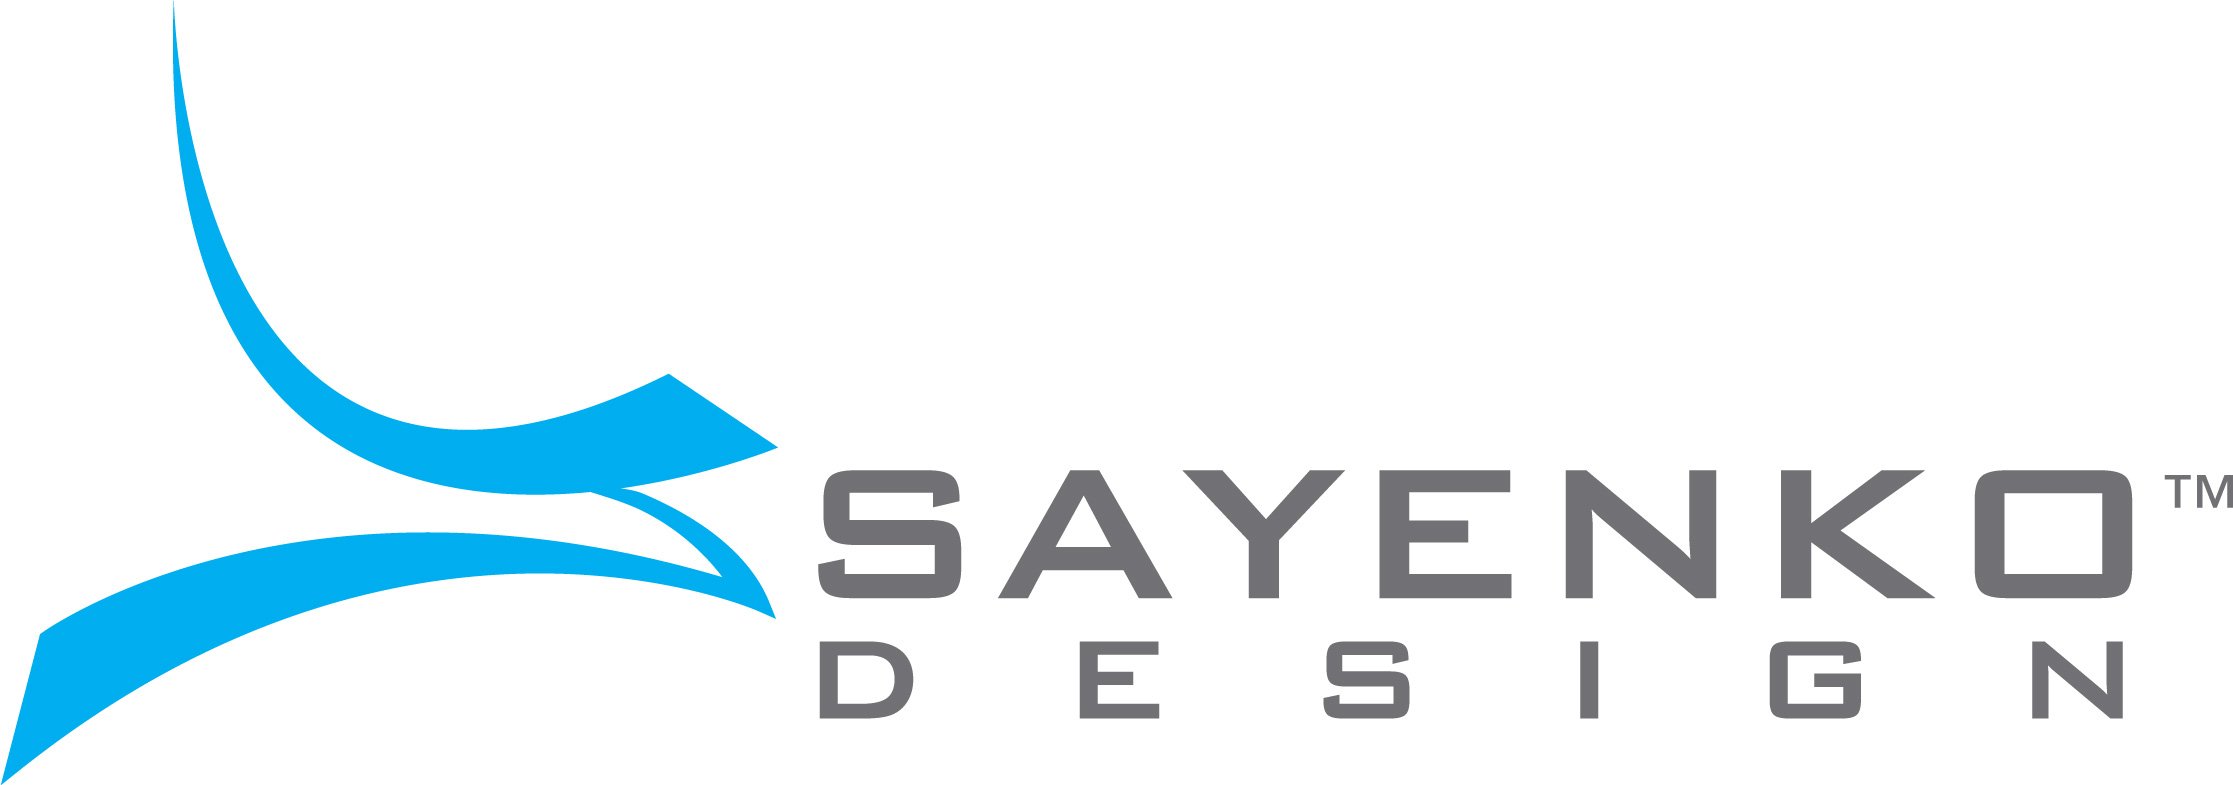 Best Web Design Company Logo: Sayenko Design